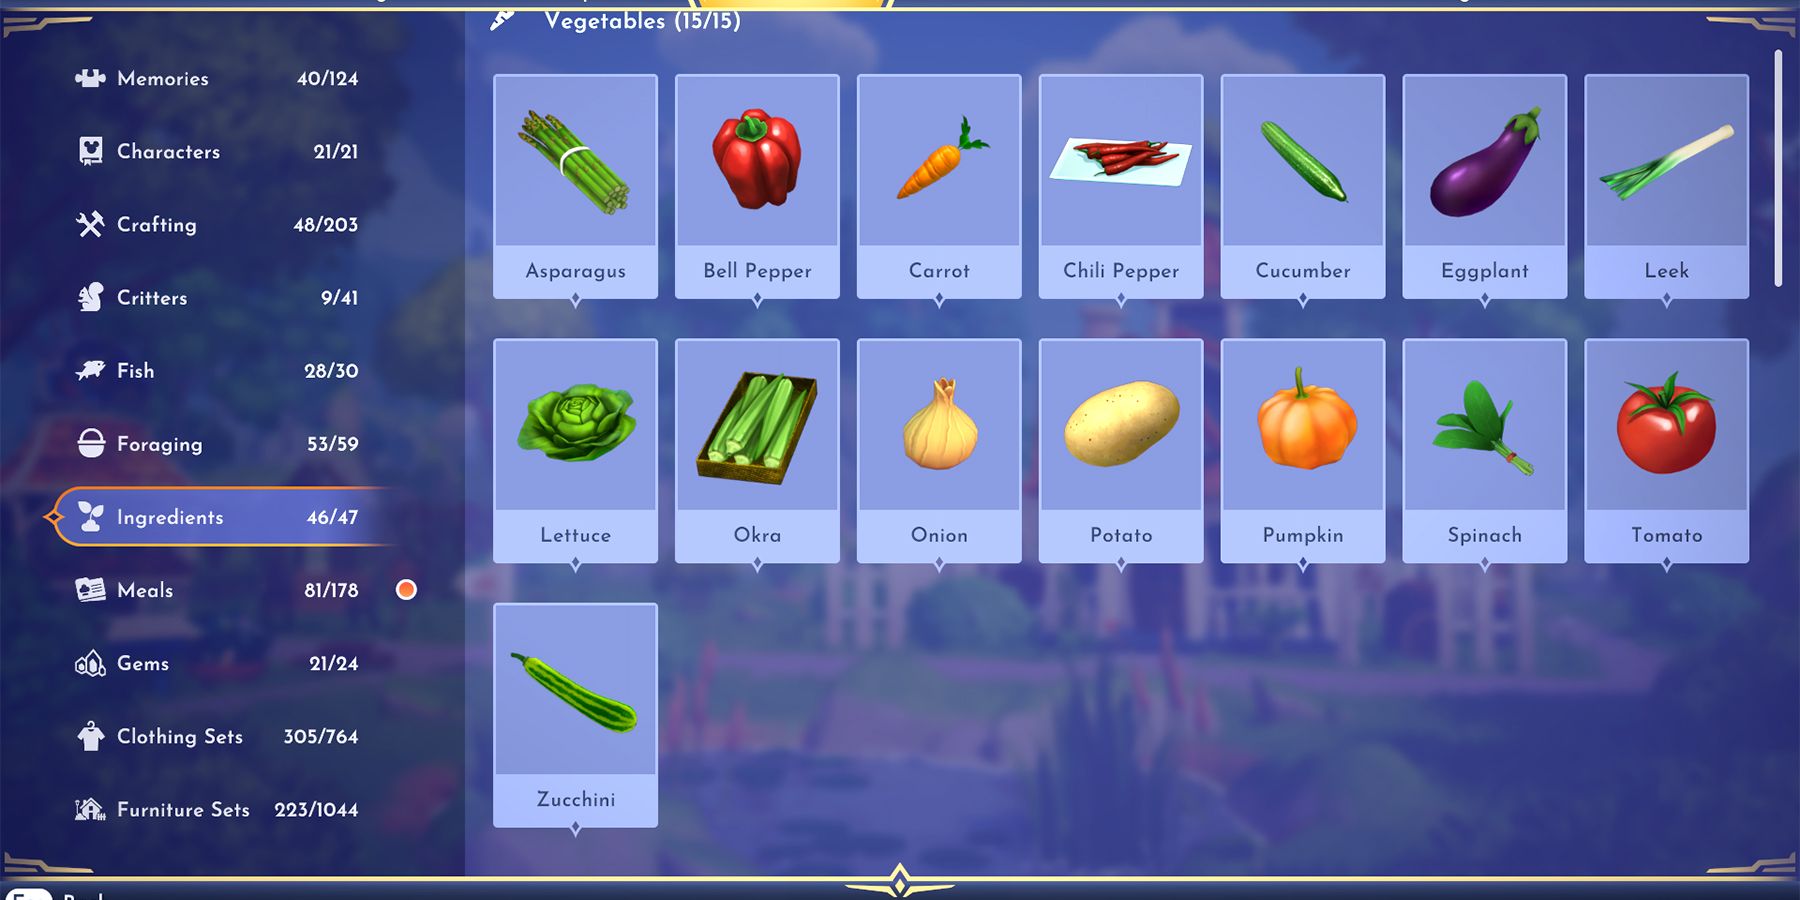 légumes dans la vallée dreamlight de disney